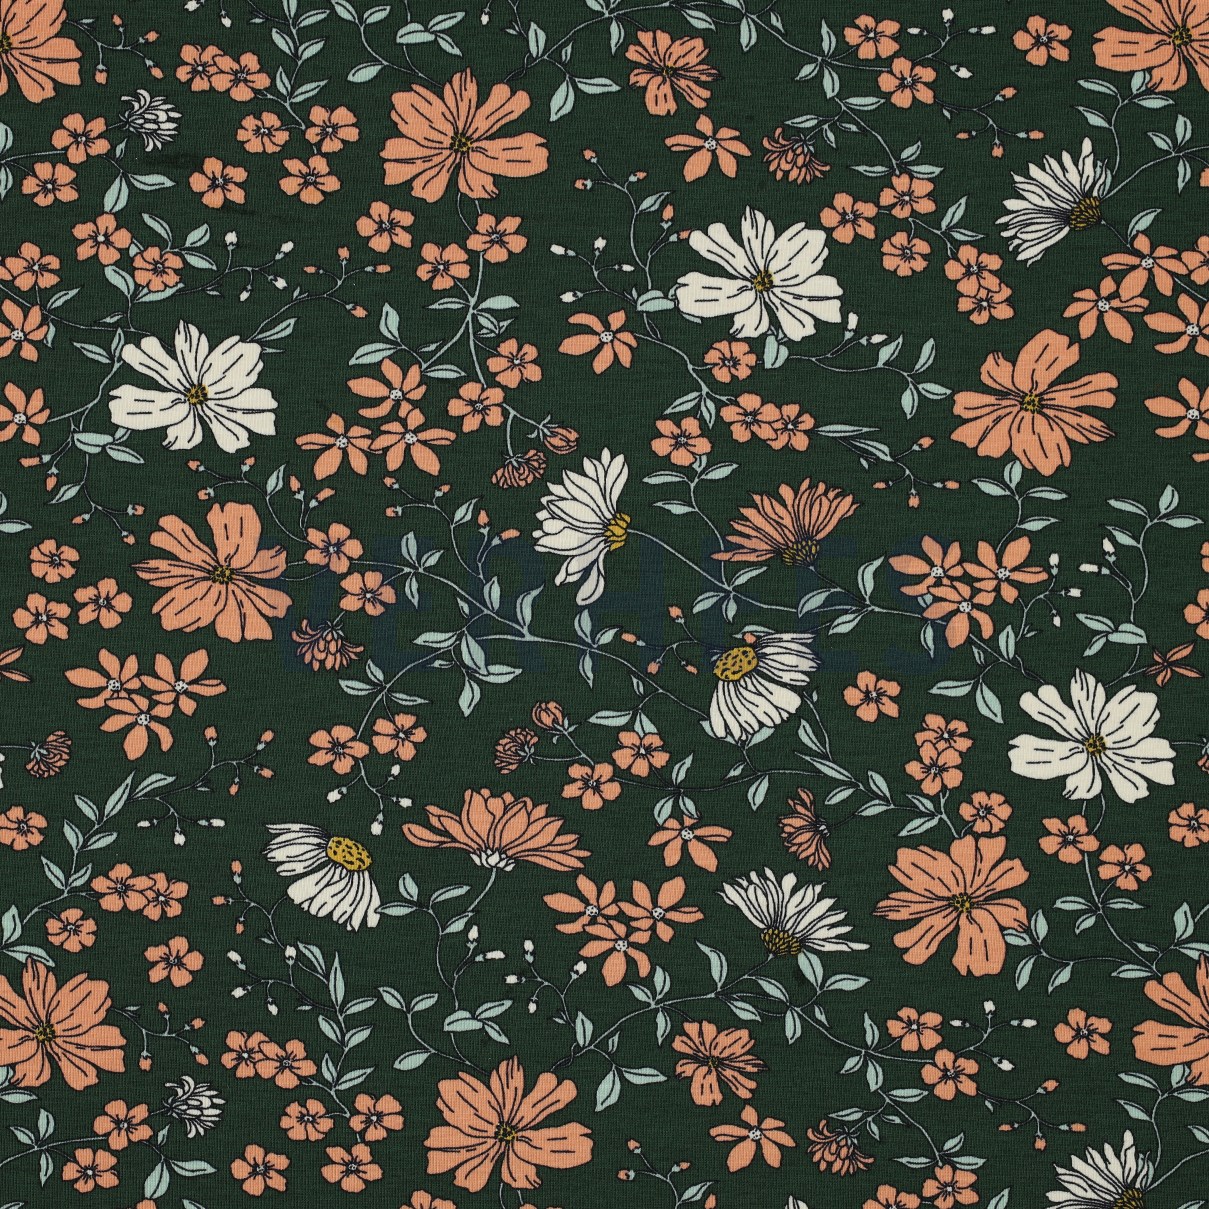 JERSEY FLOWERS DARK GREEN (high resolution)